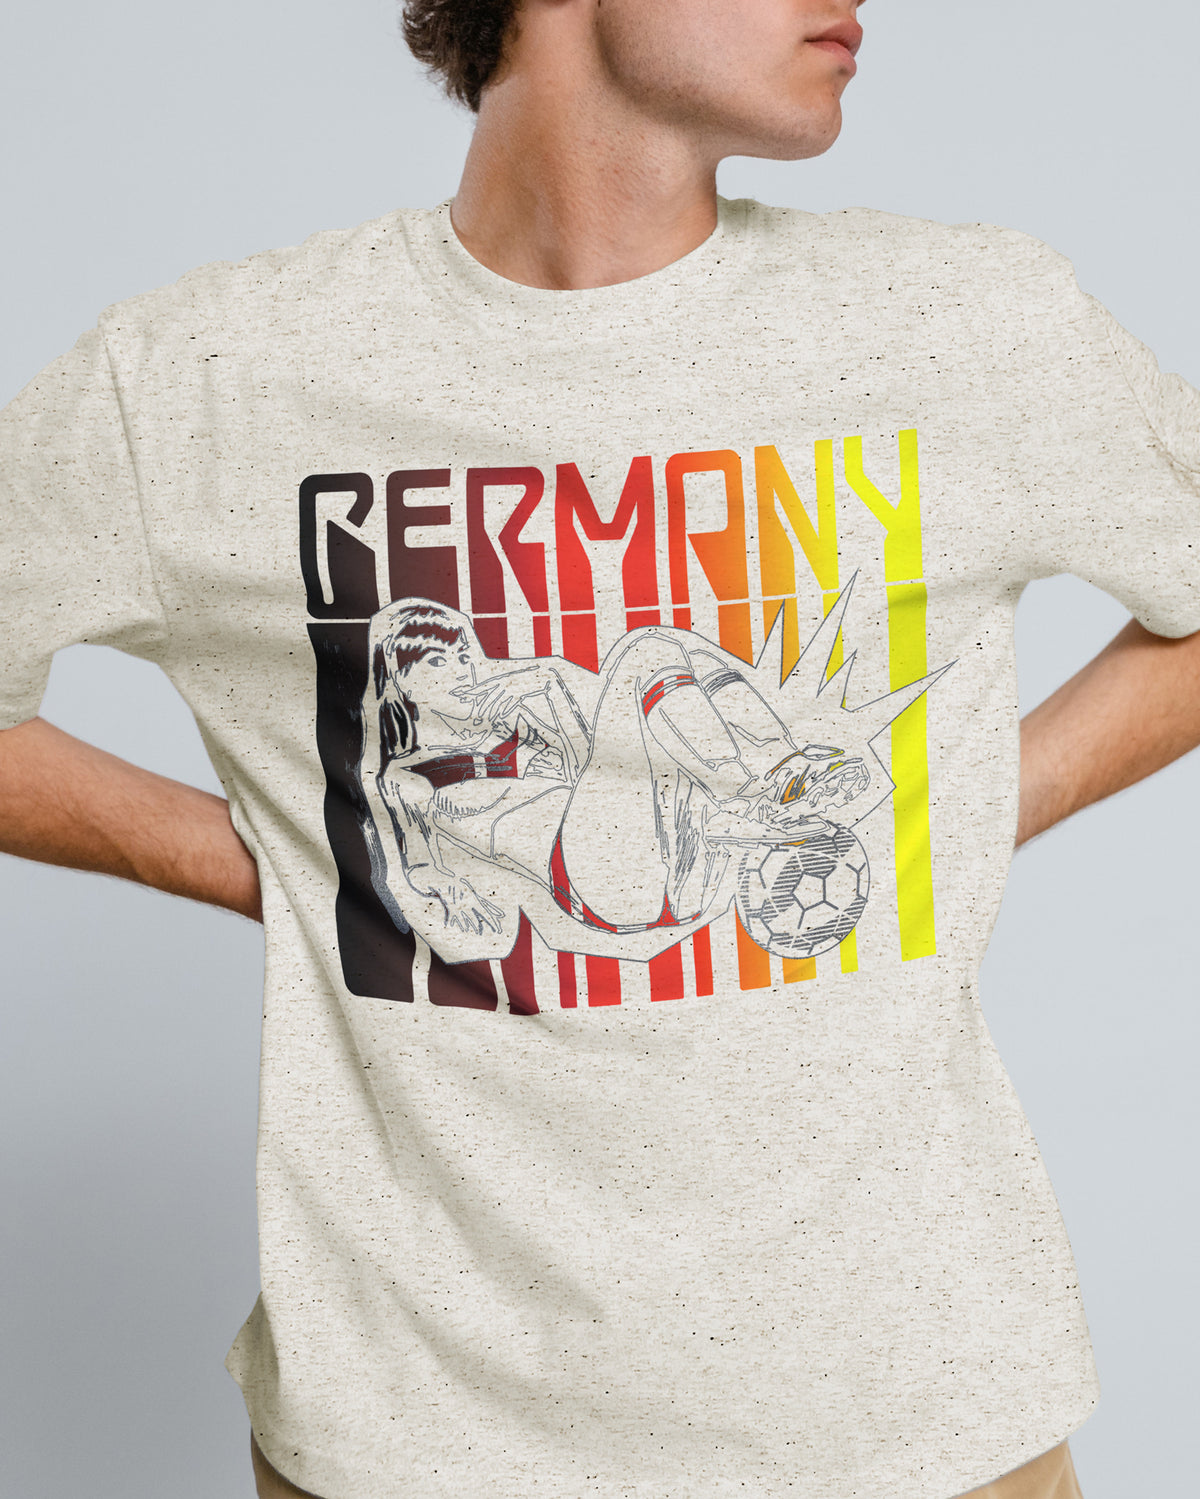 GERMANY Calendar Girls Soccer T-Shirt